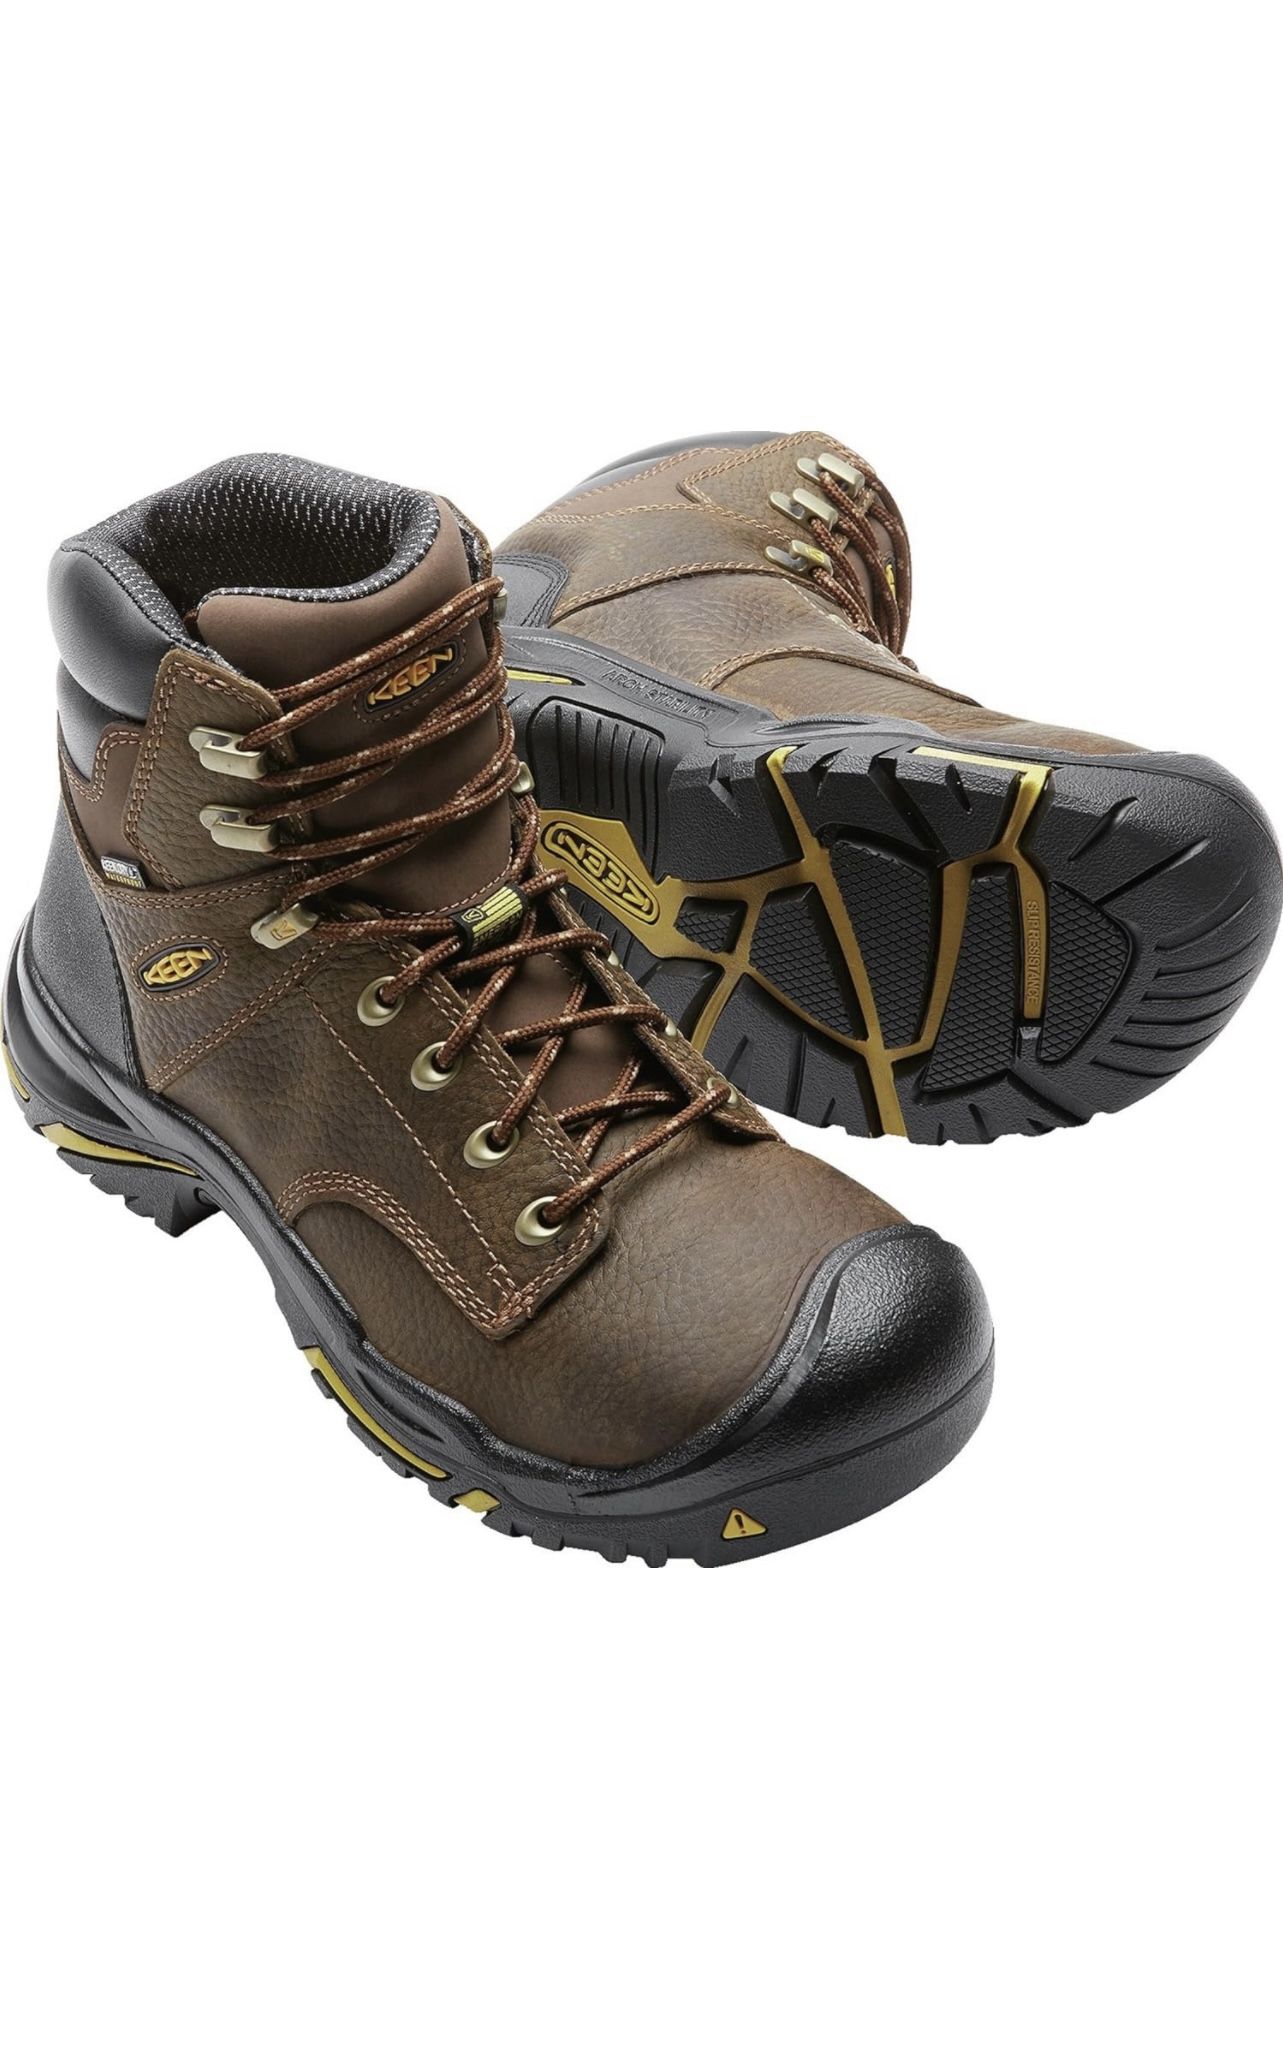 KEEN Men's Mt Vernon 6" Soft Toe Waterproof Boots, Size 11.5W, Color Cascade Brown 